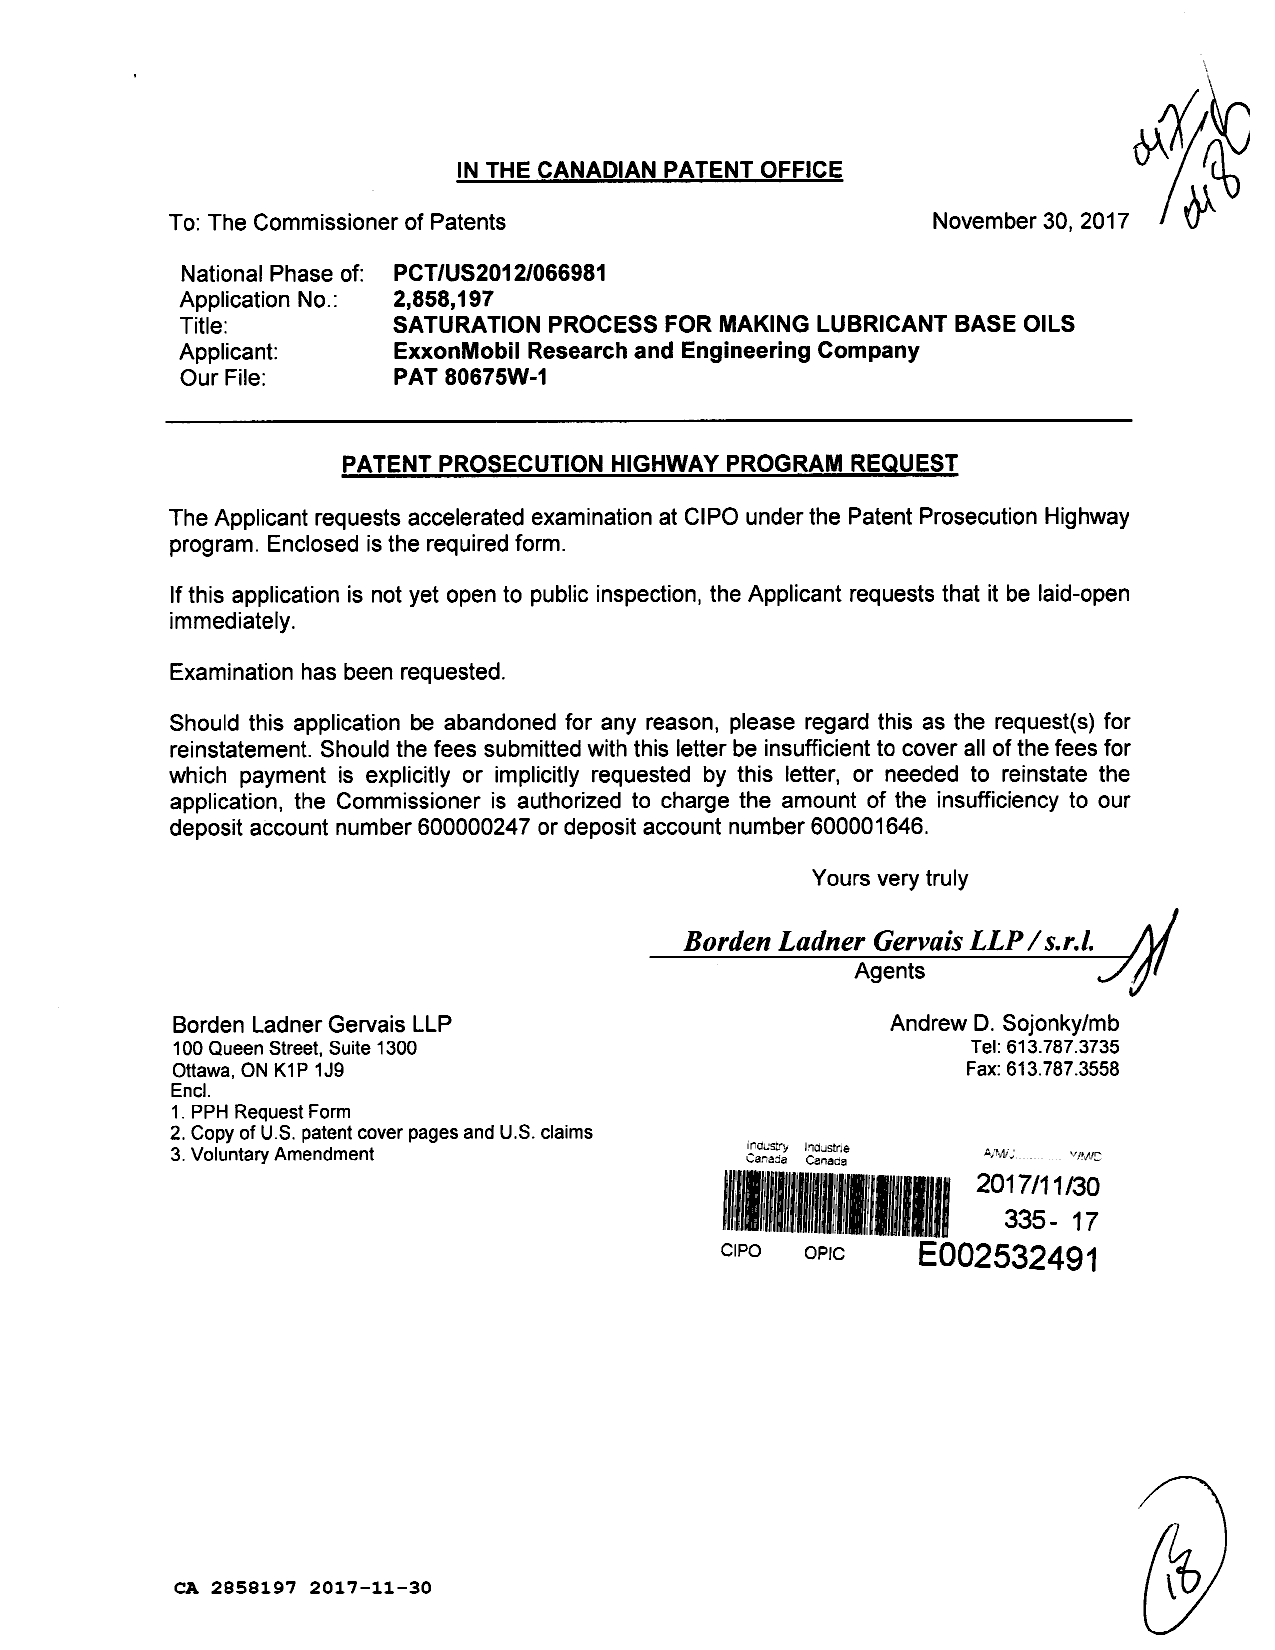 Canadian Patent Document 2858197. Amendment 20171130. Image 1 of 11